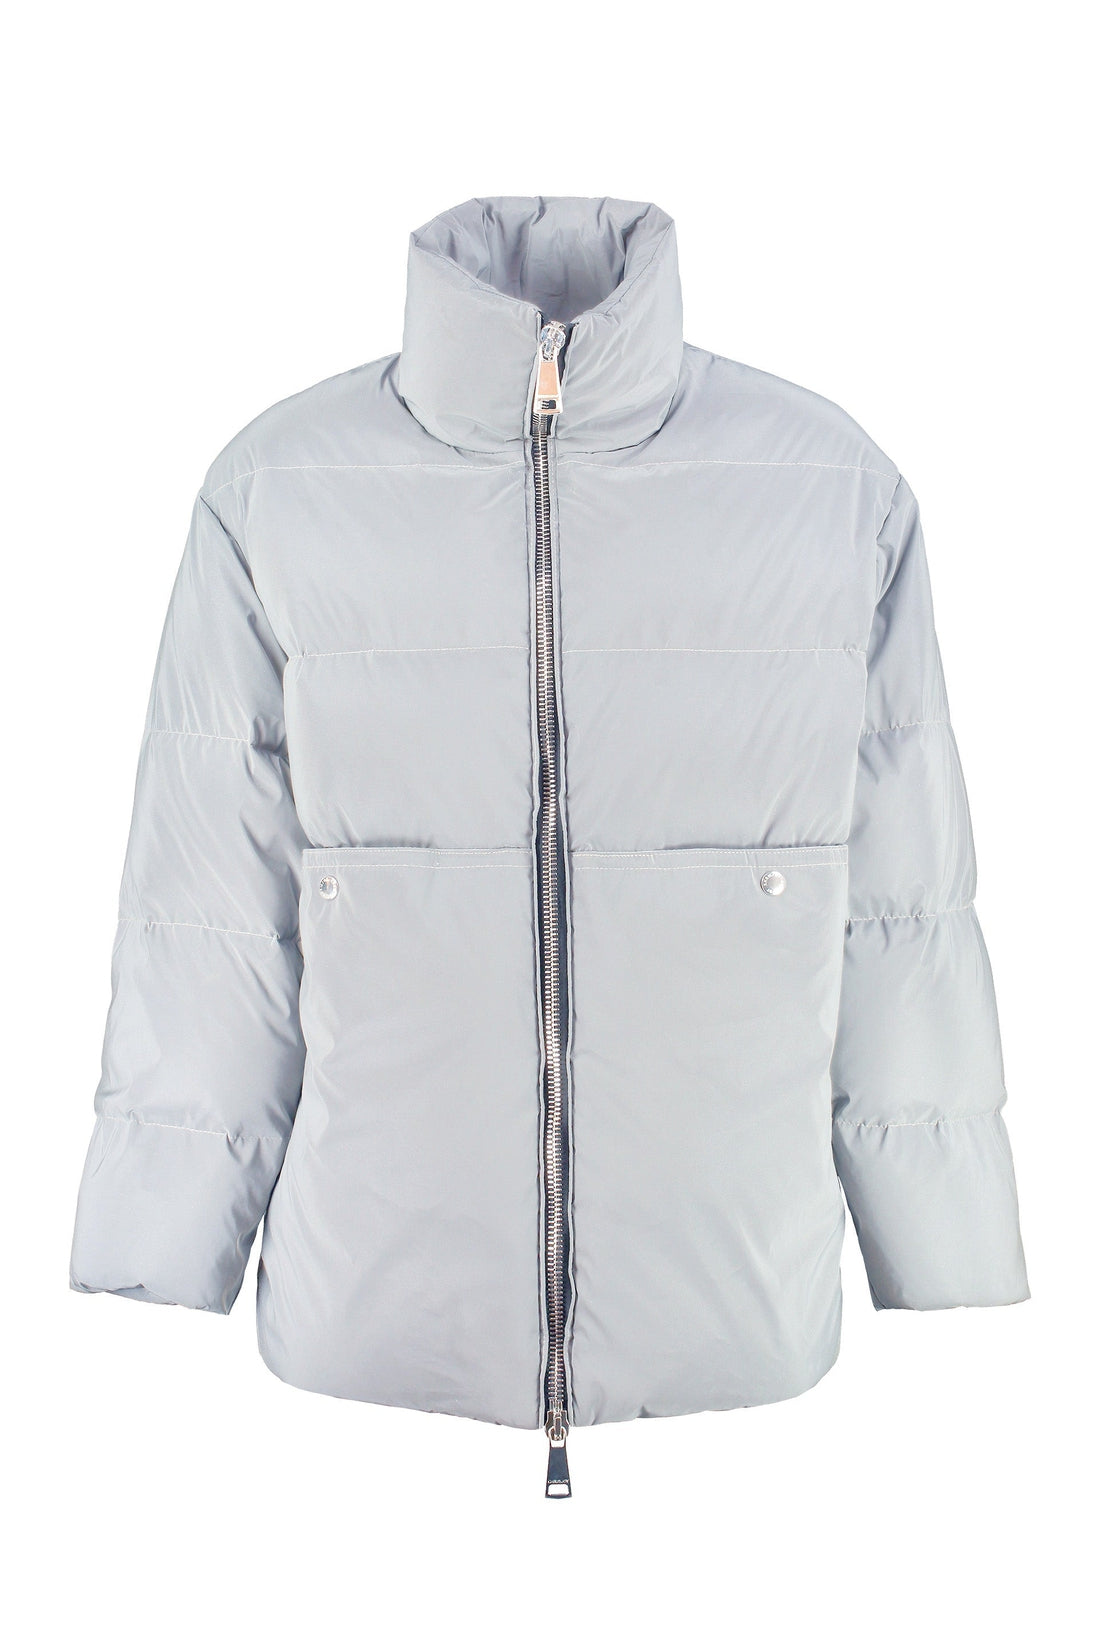 Khrisjoy-OUTLET-SALE-Khris full zip padded jacket-ARCHIVIST